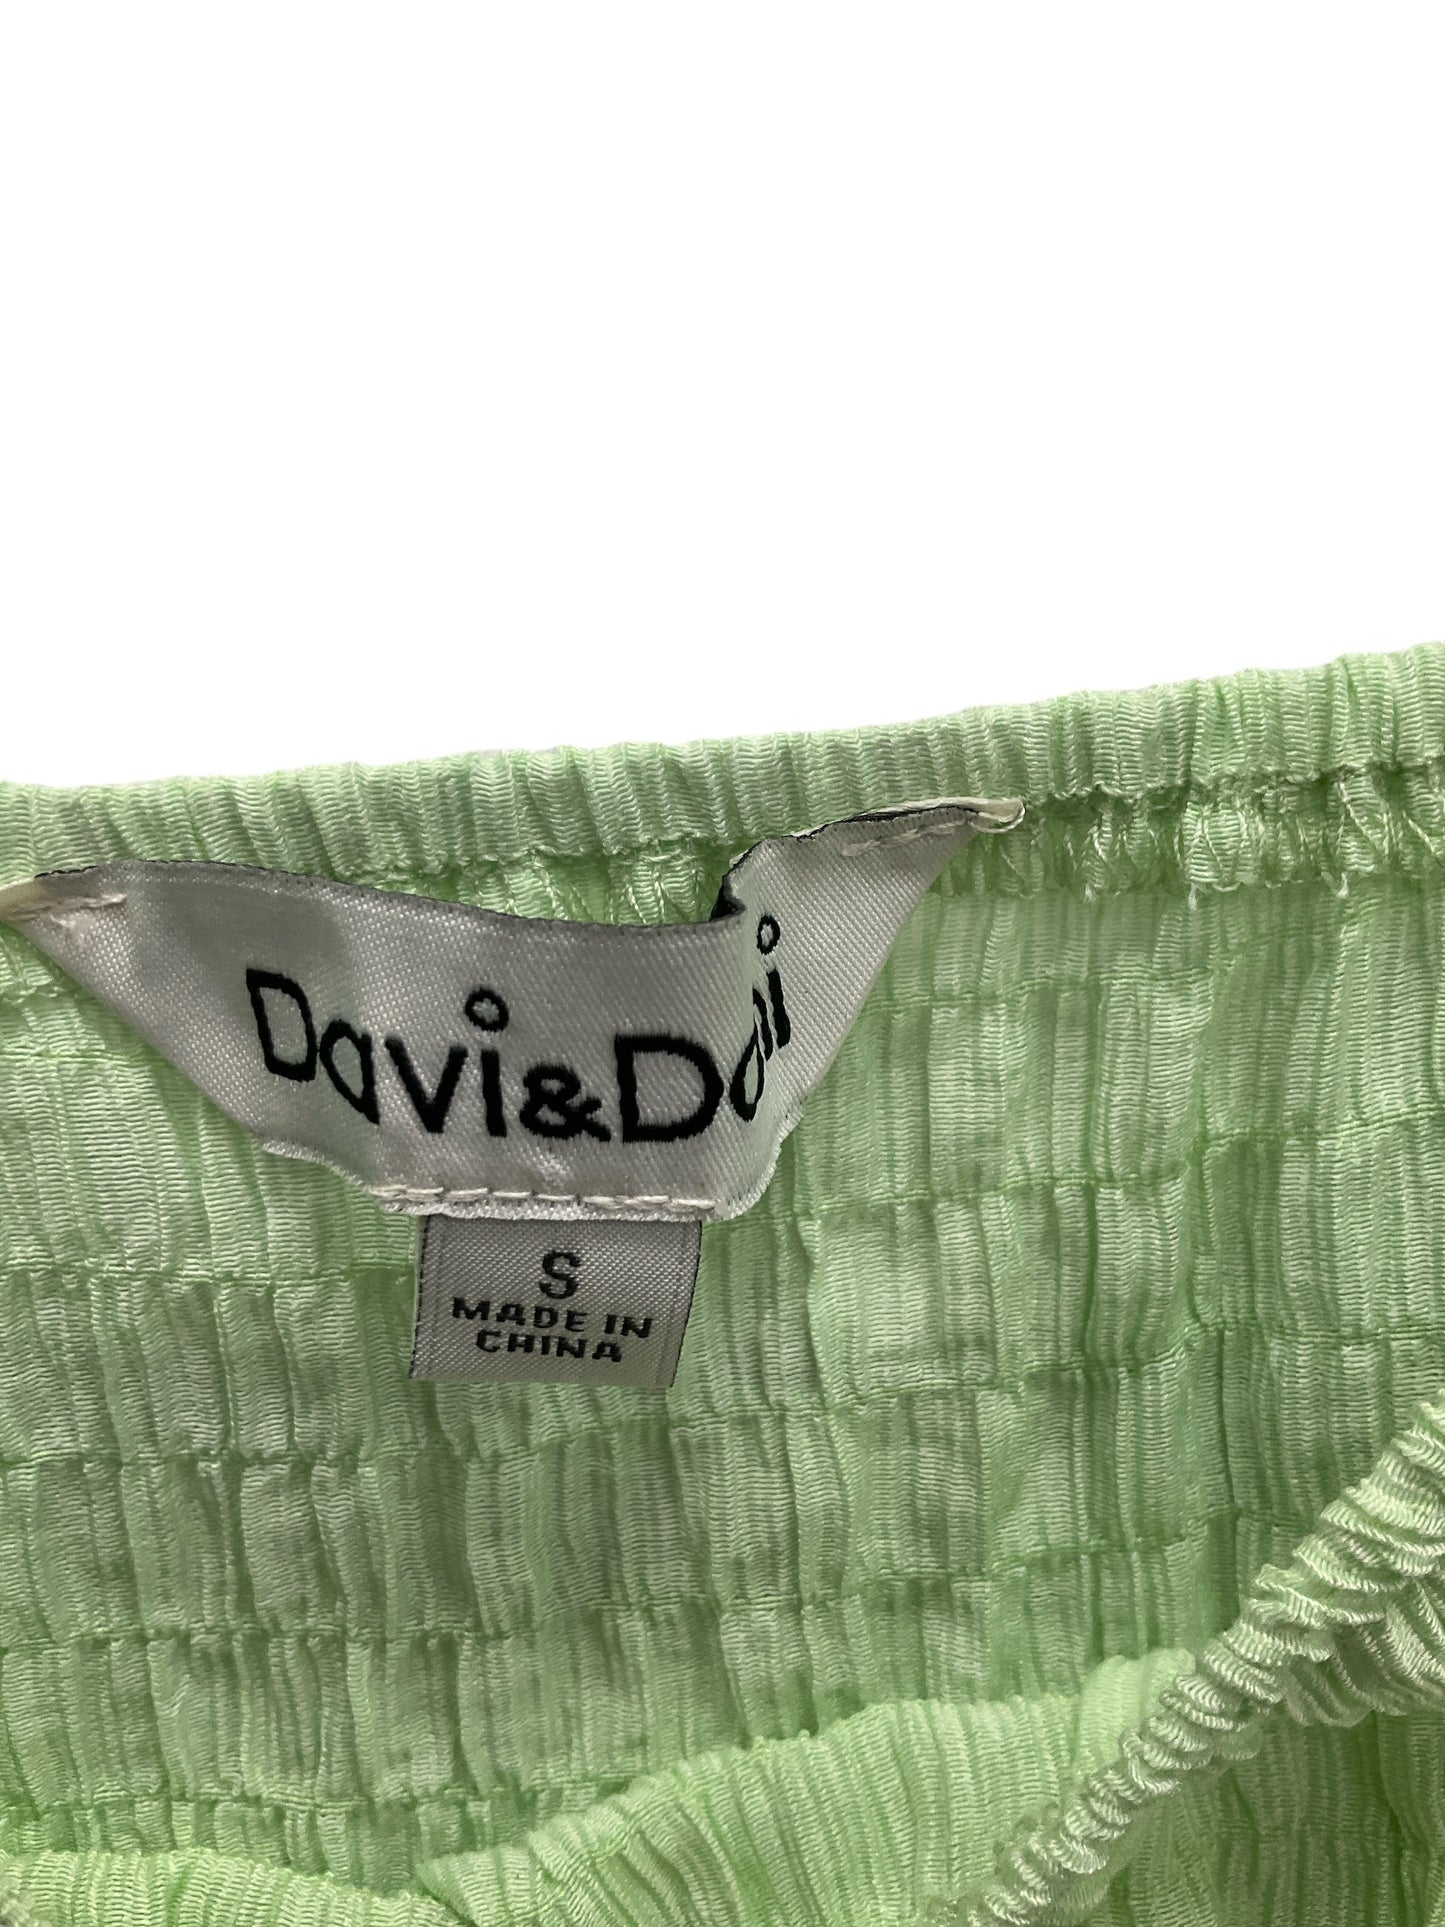 Top Sleeveless By Davi & Dani  Size: S